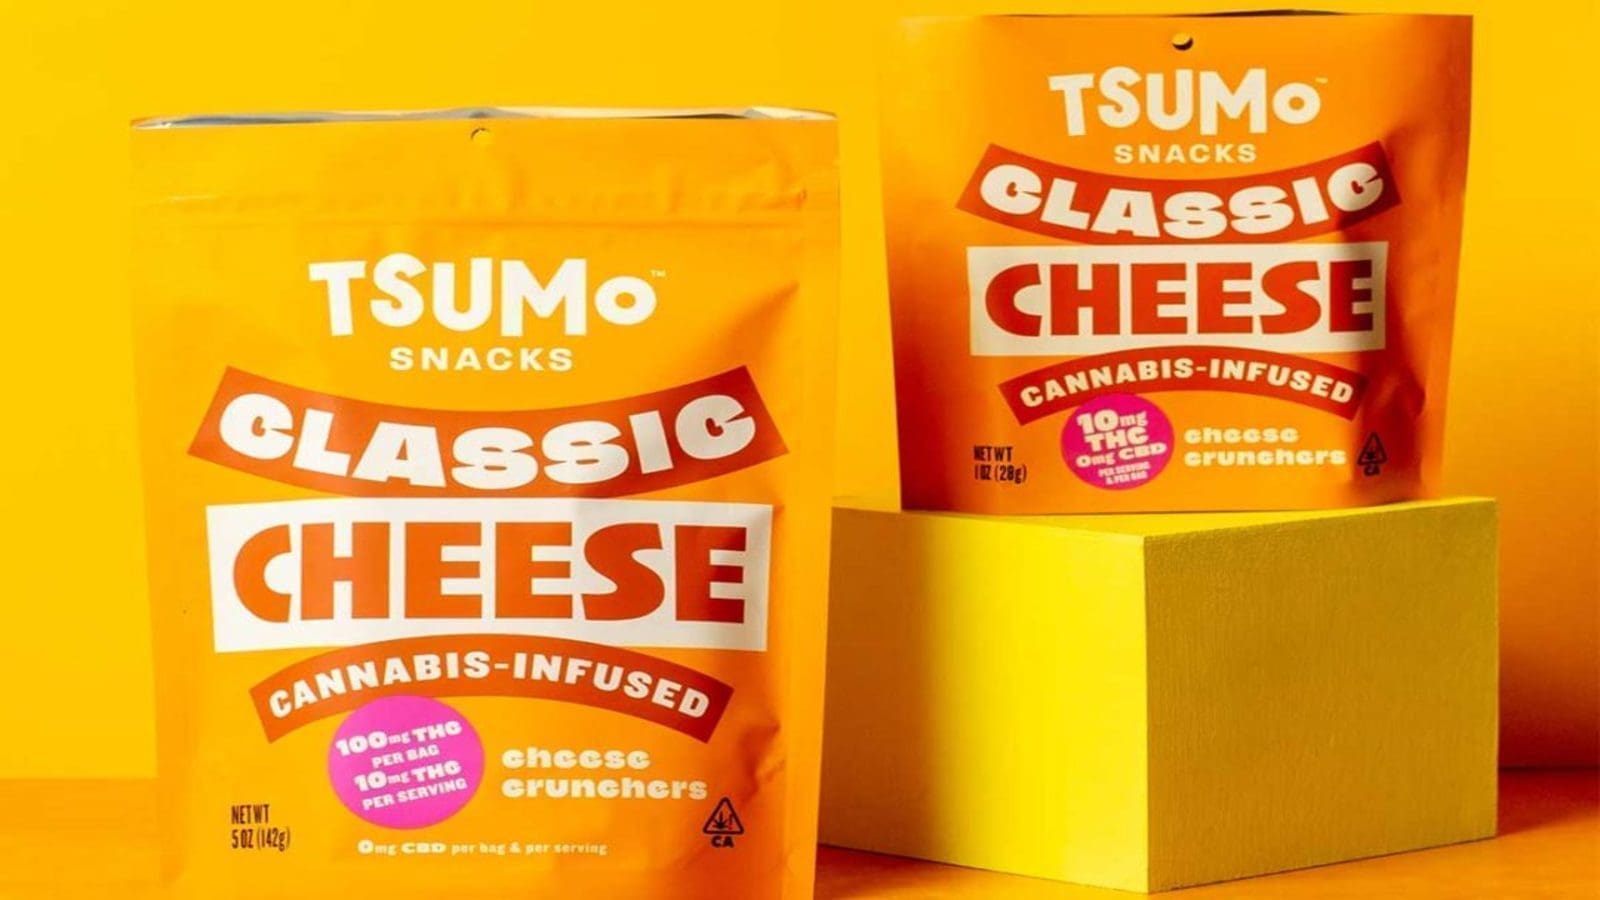 #Snack Tuesday: New products from Krispy Kreme, Kodiak Cakes, and TSUMo Snacks